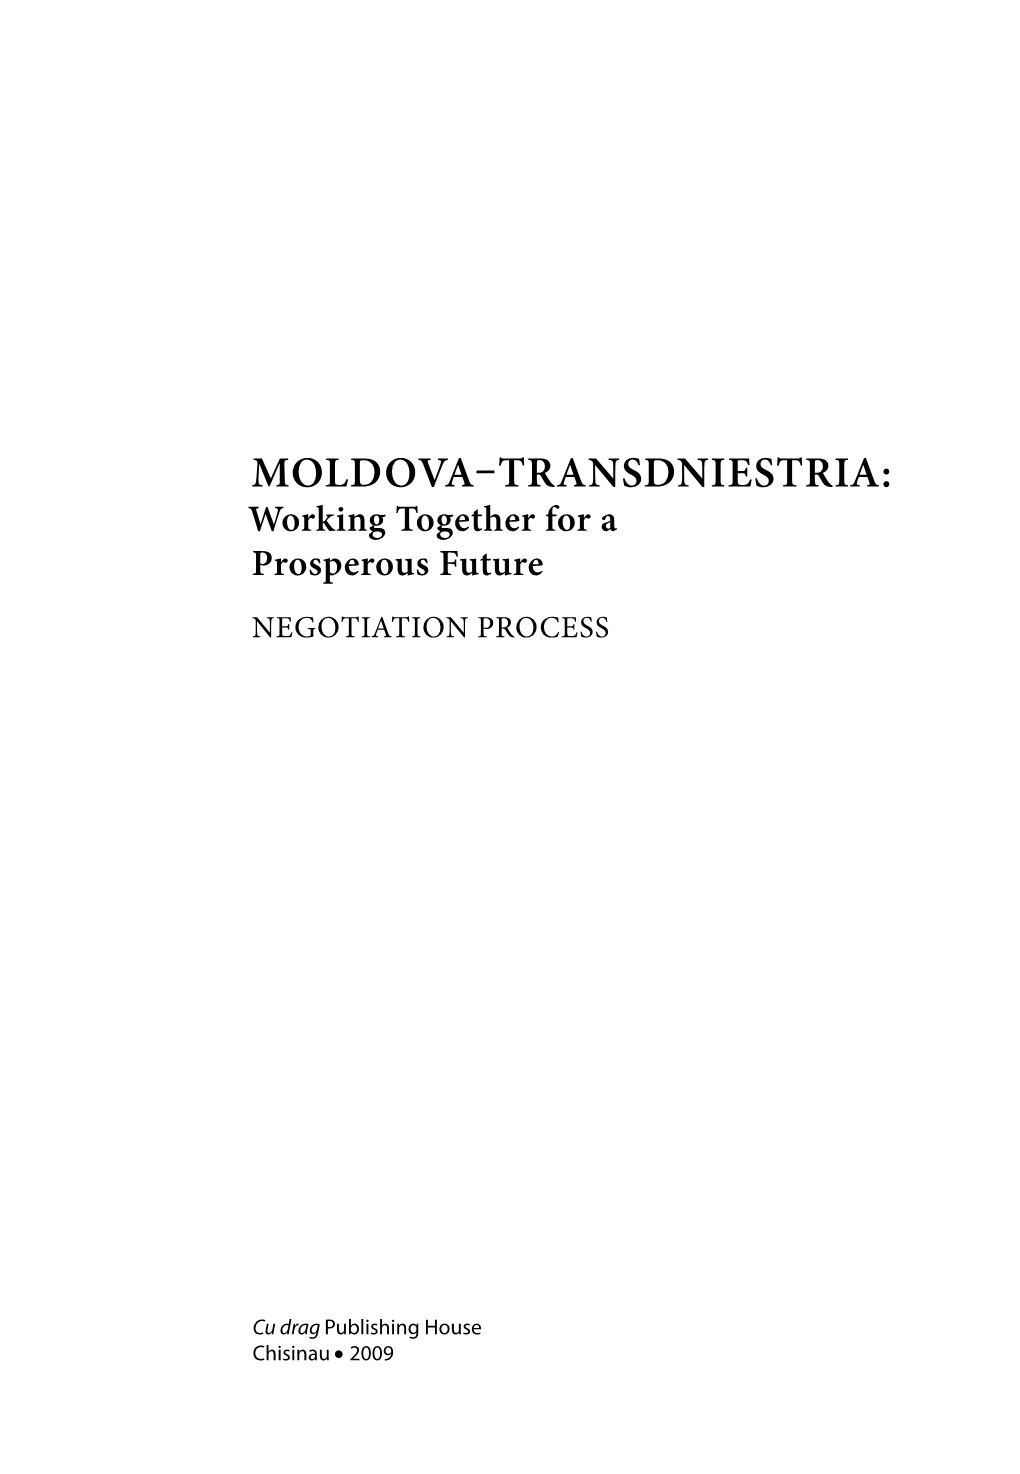 Moldova–Transdniestria: Negotiation Process